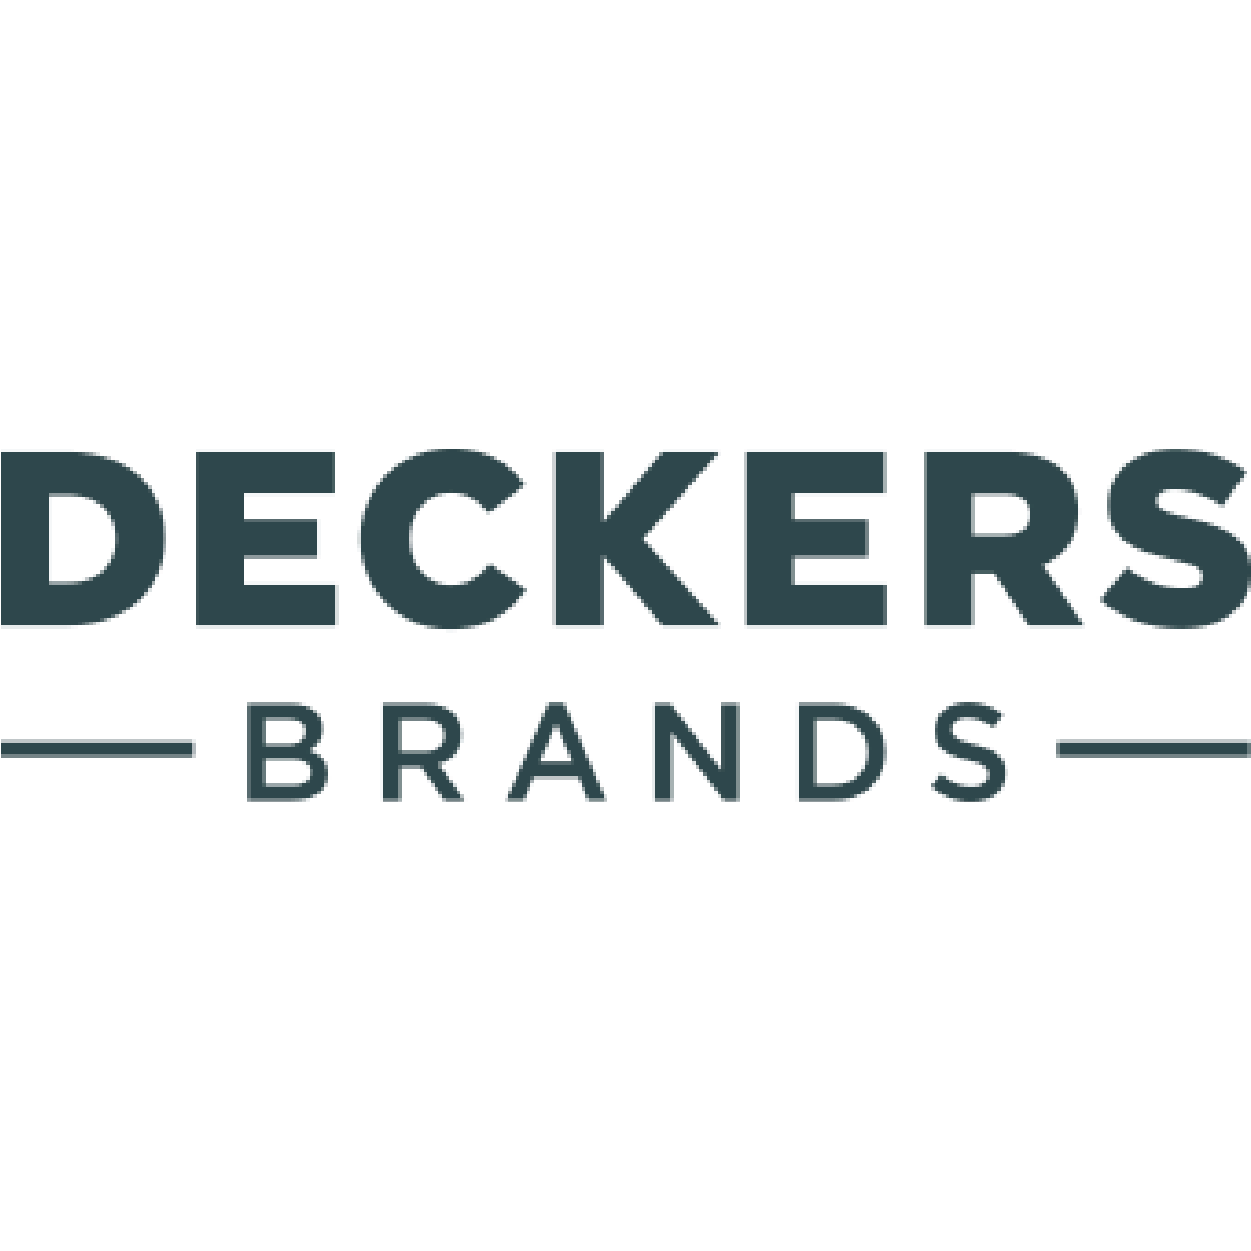 Deckers brand logo